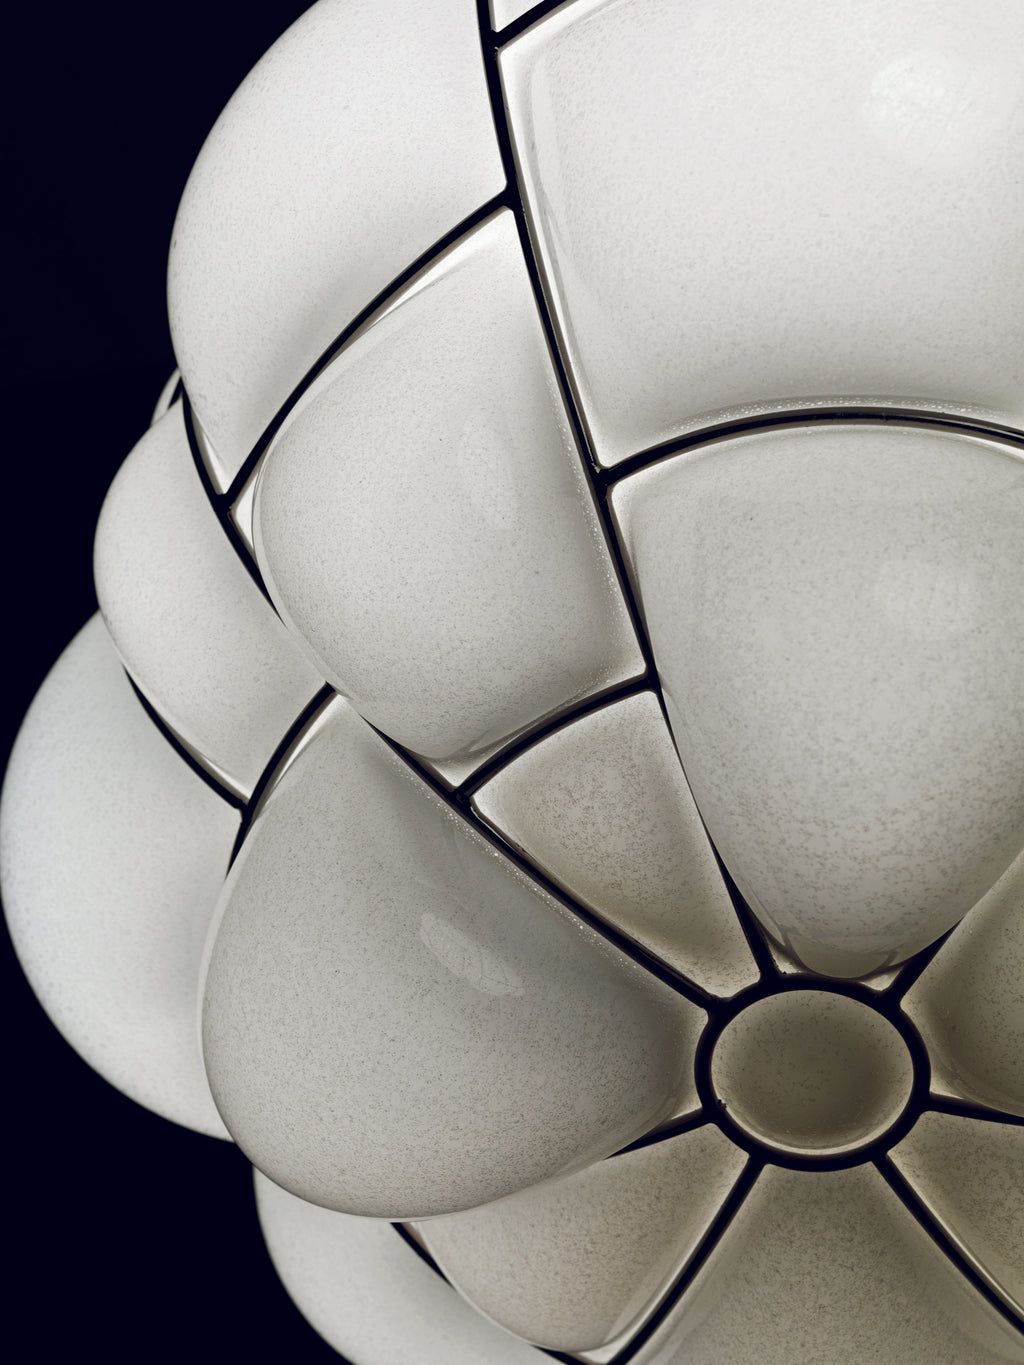 Egg design by Enrico Franzolini